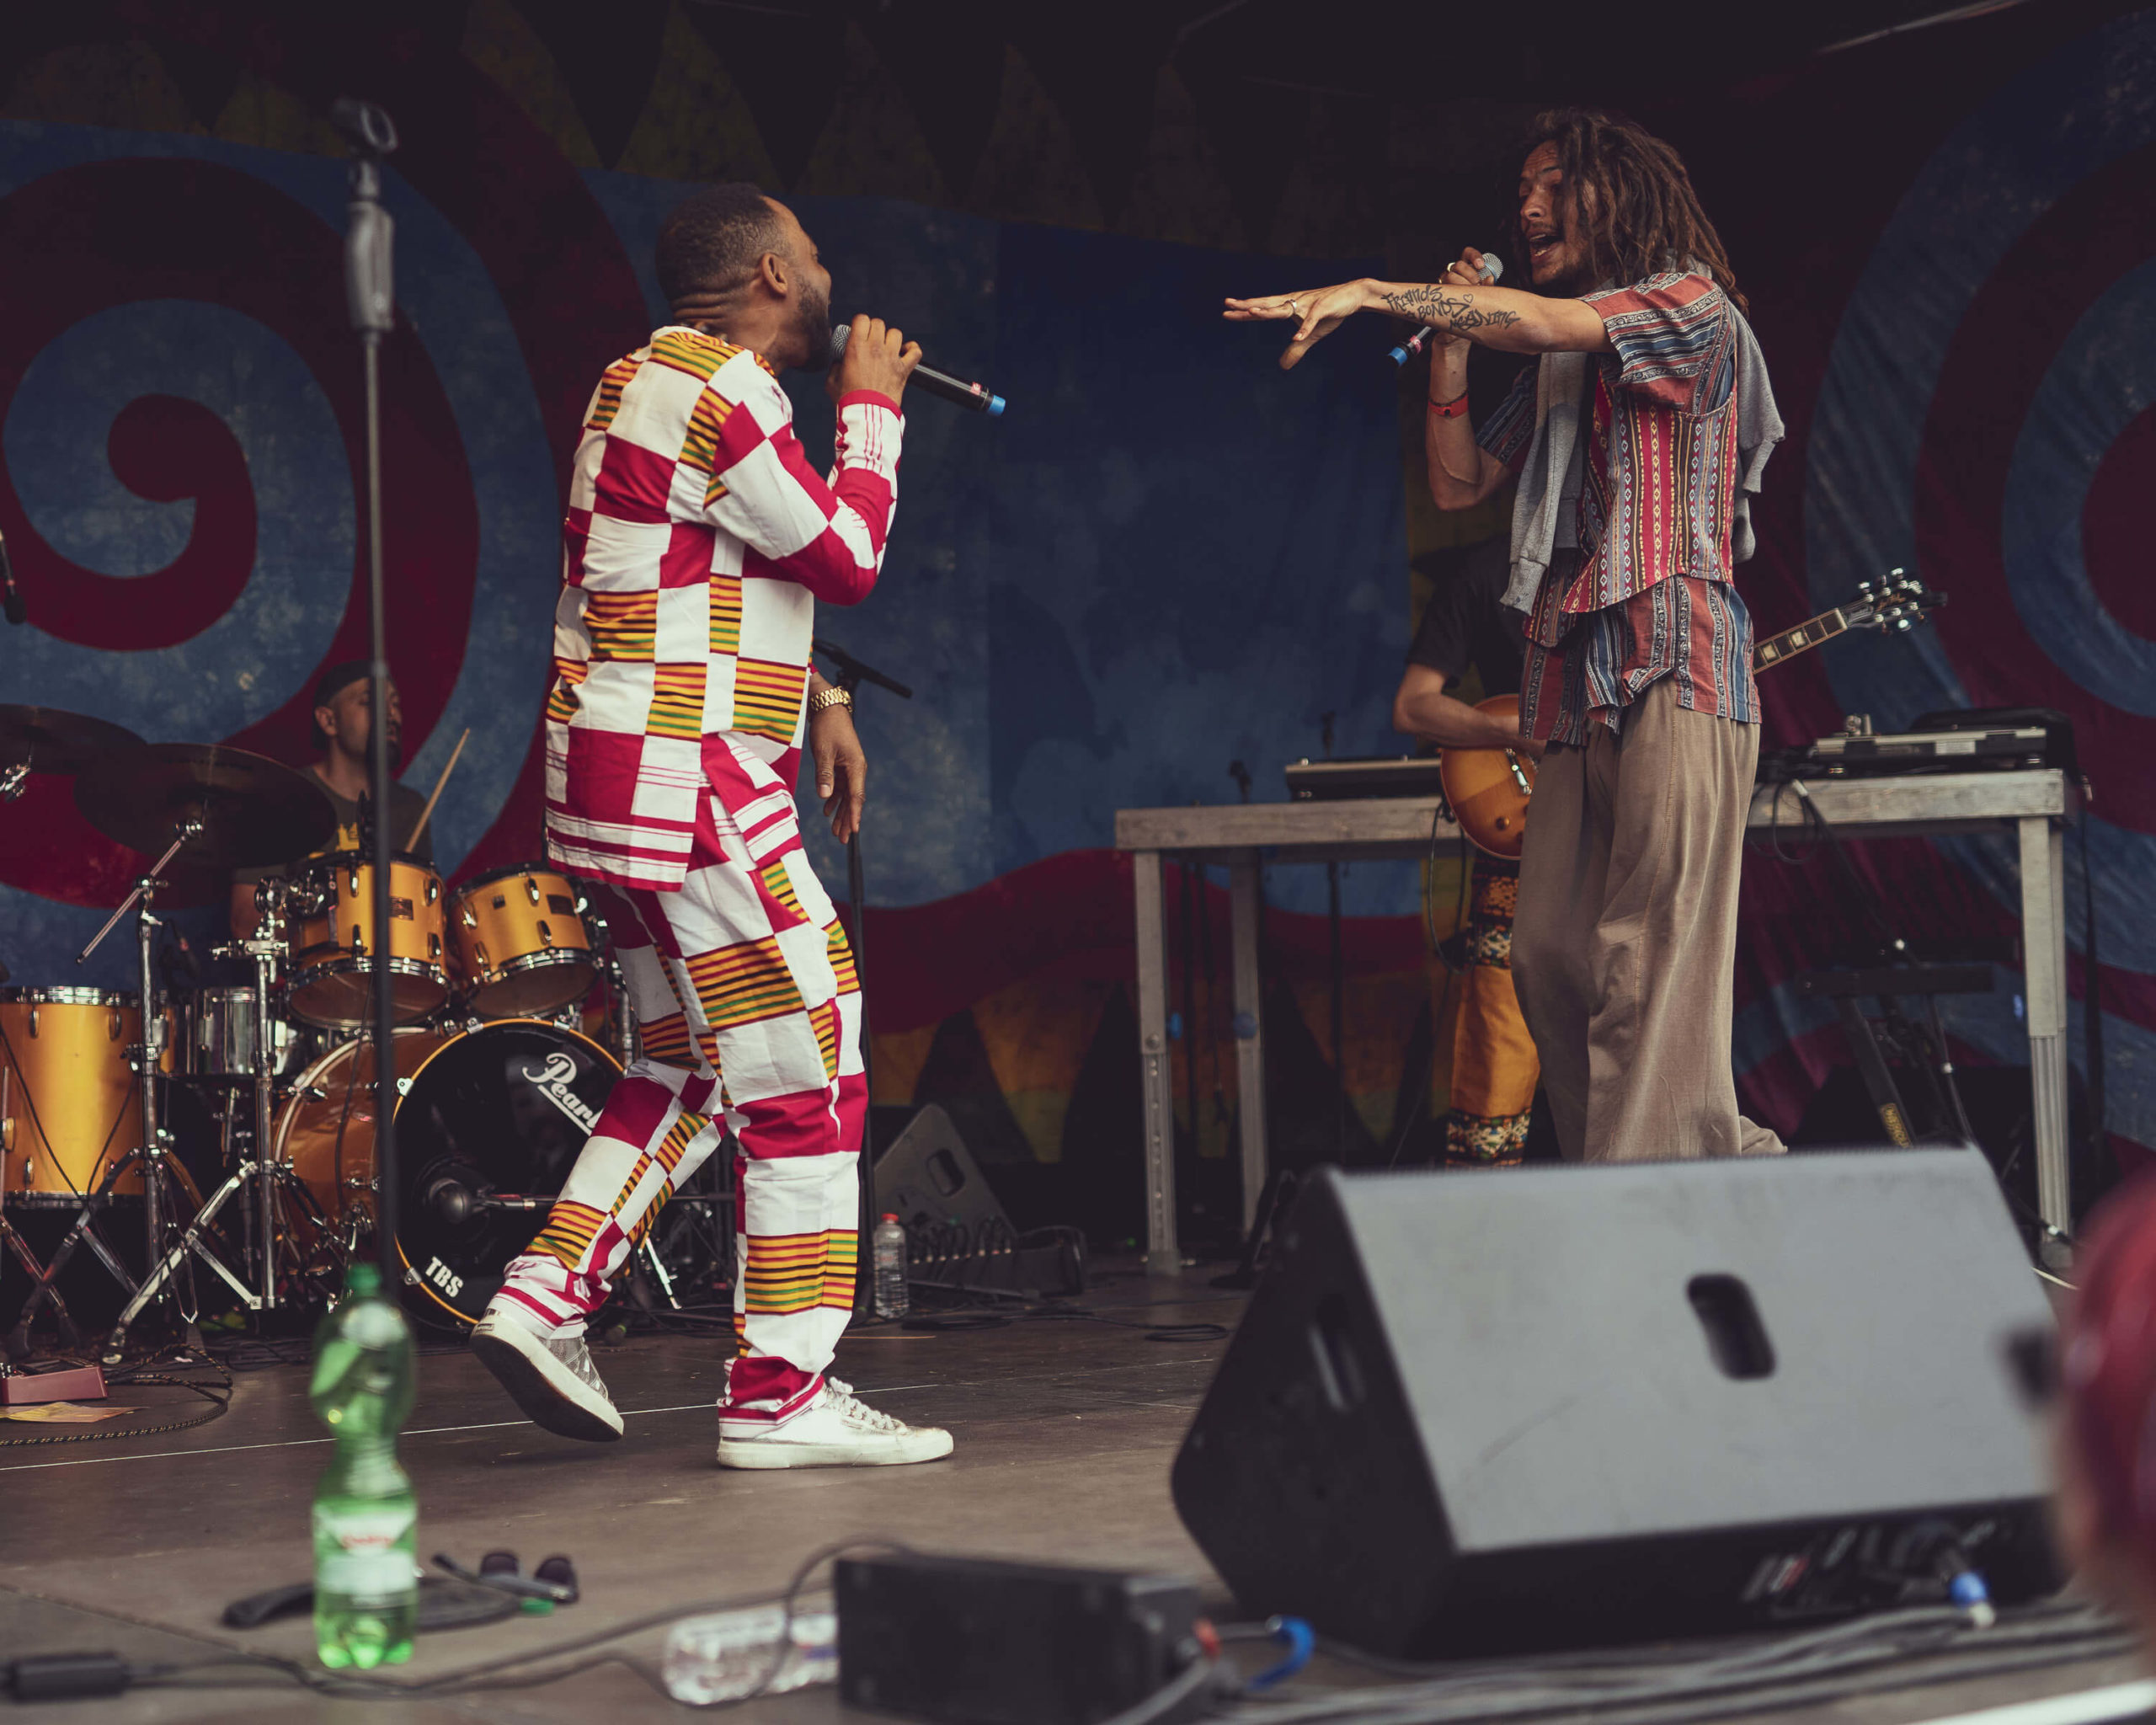 Julian Asher sings with Izzy Amuw on Black Atlantica stage at concert at street festival Karneval der Kulturen Berlin